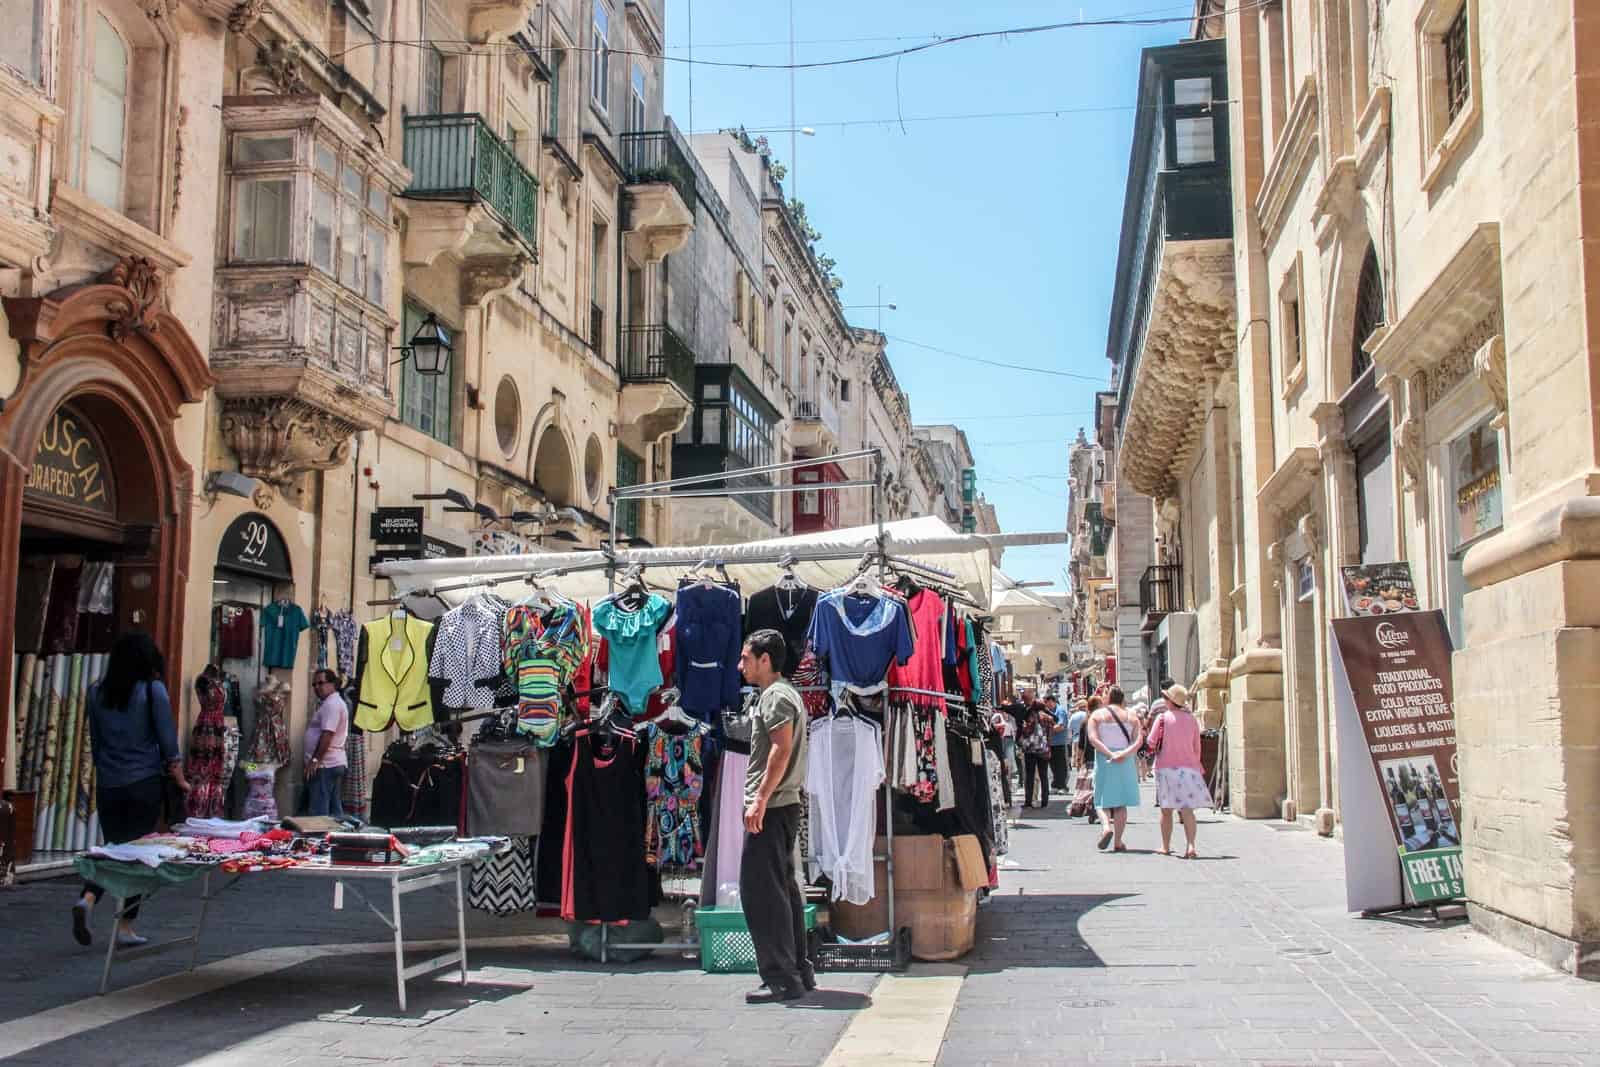 Man selling goods at a market stall in Valletta in Malta